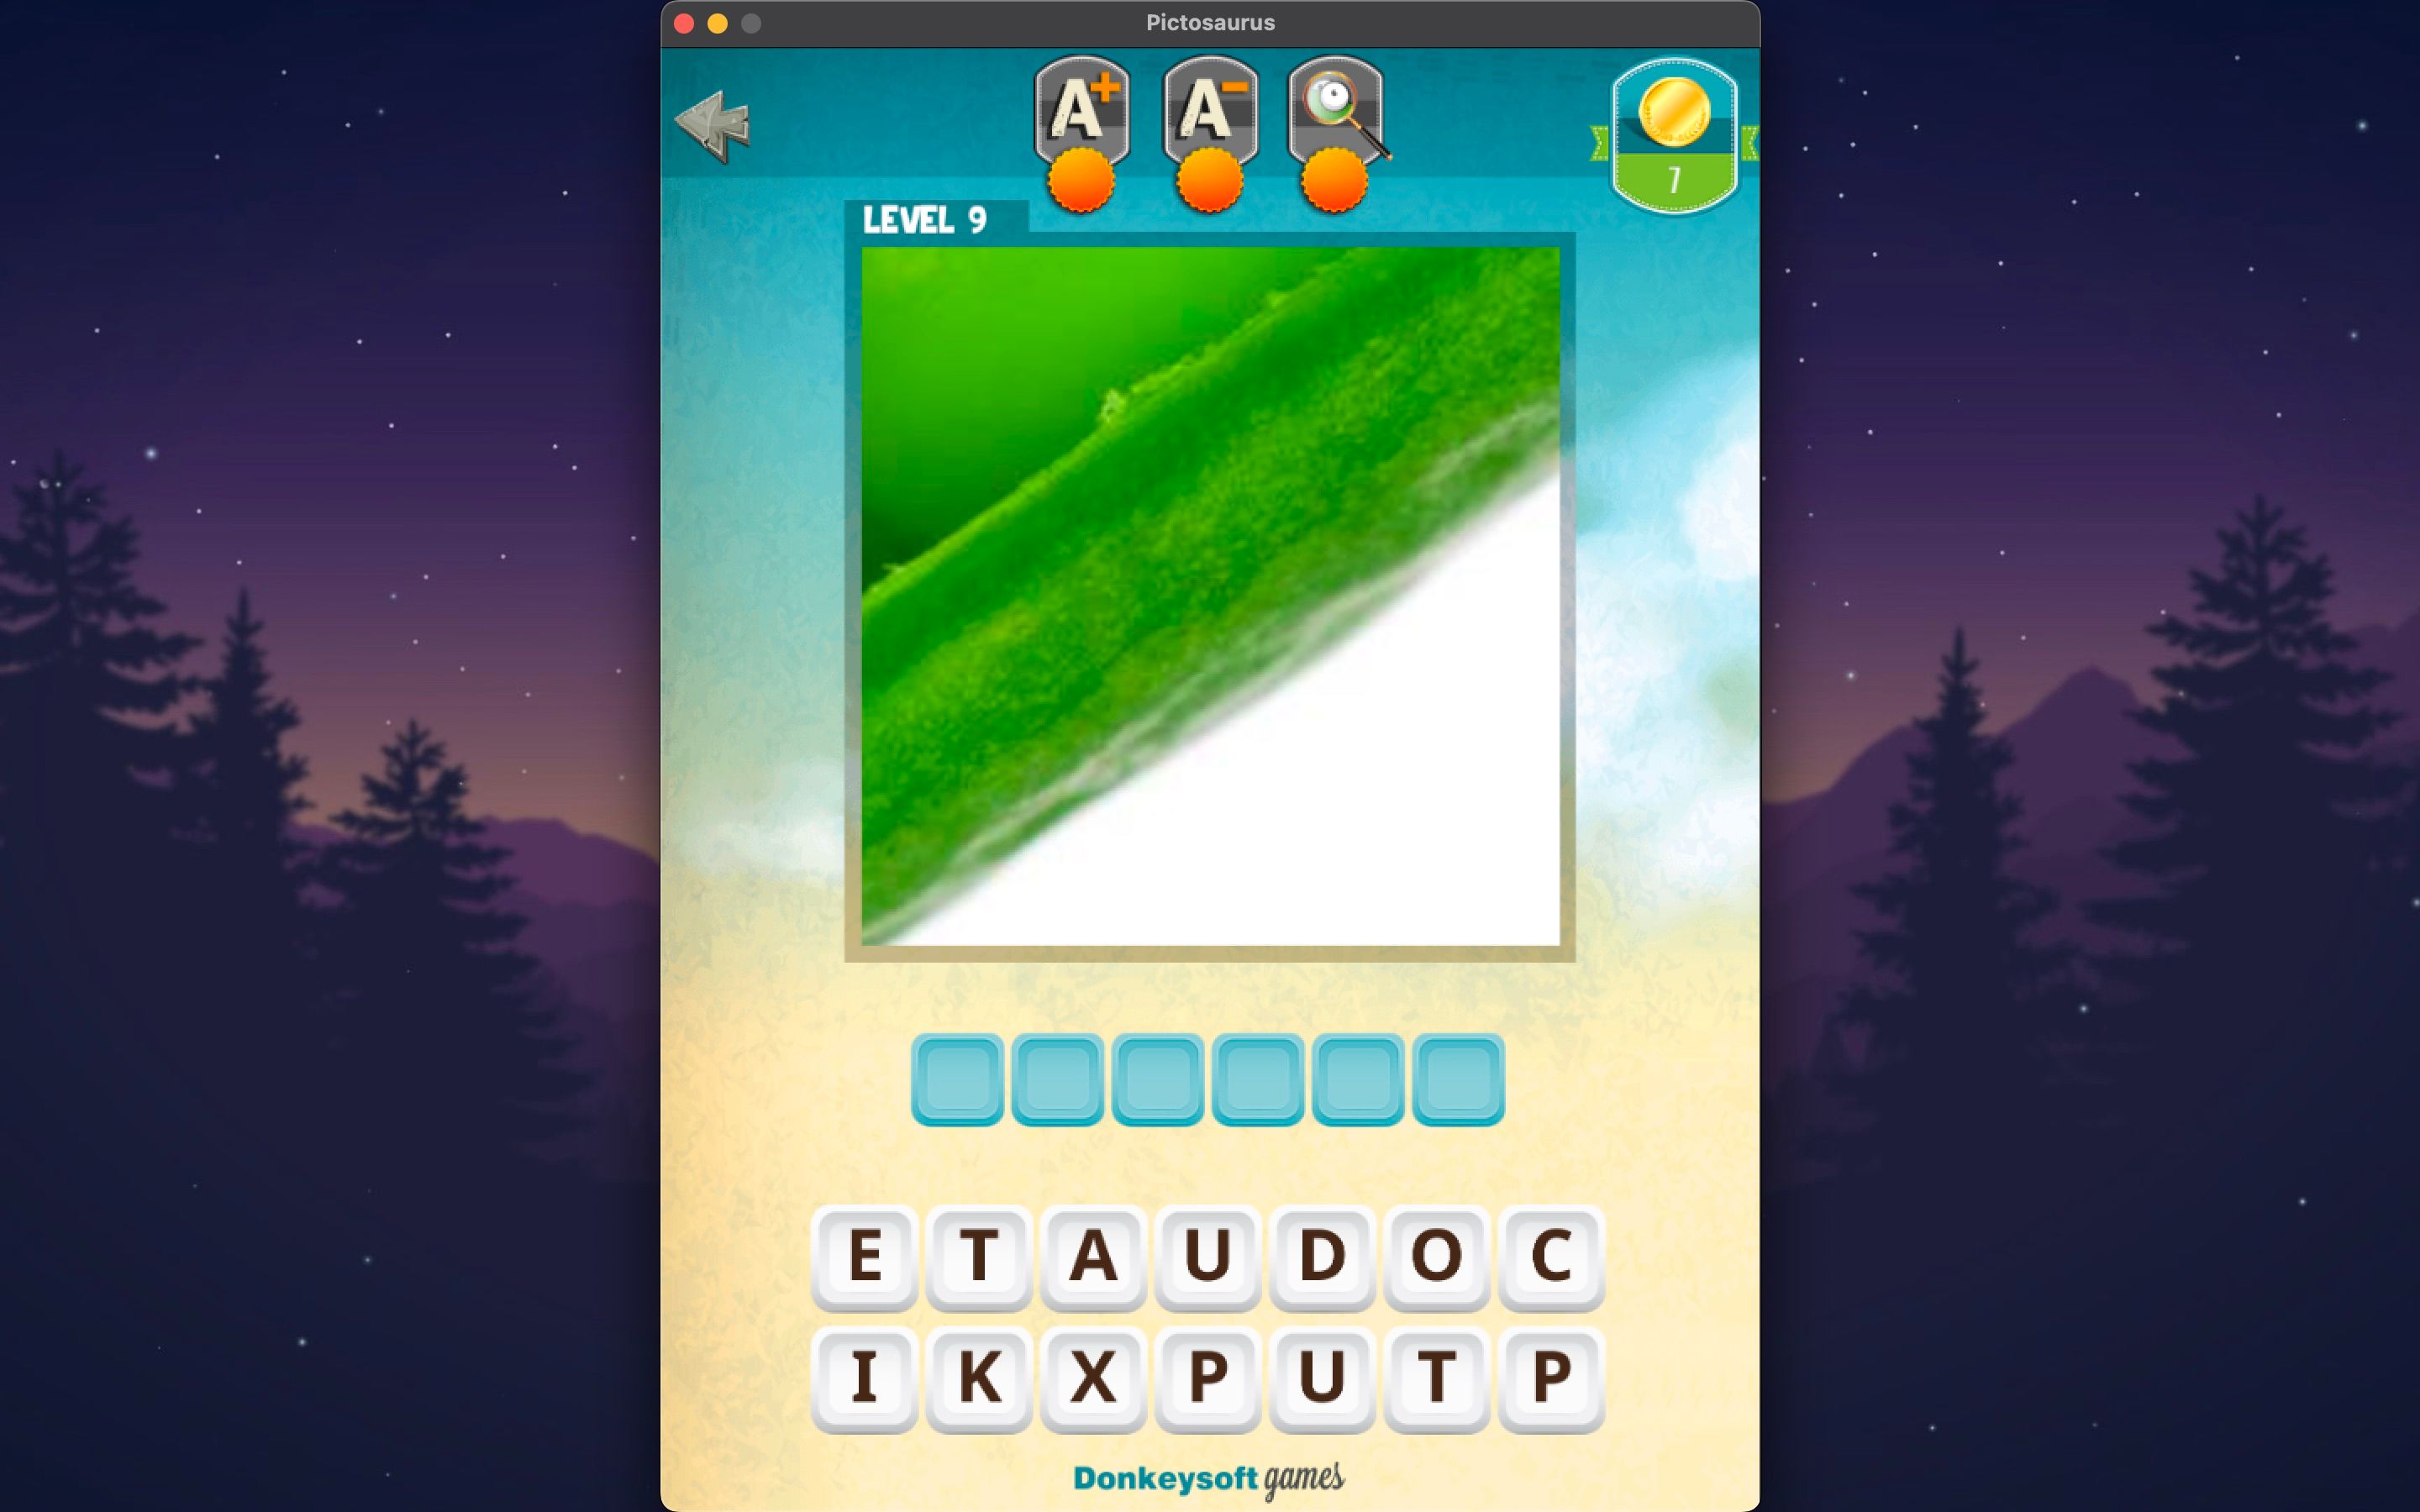 Pictosaurus screenshot at level 9